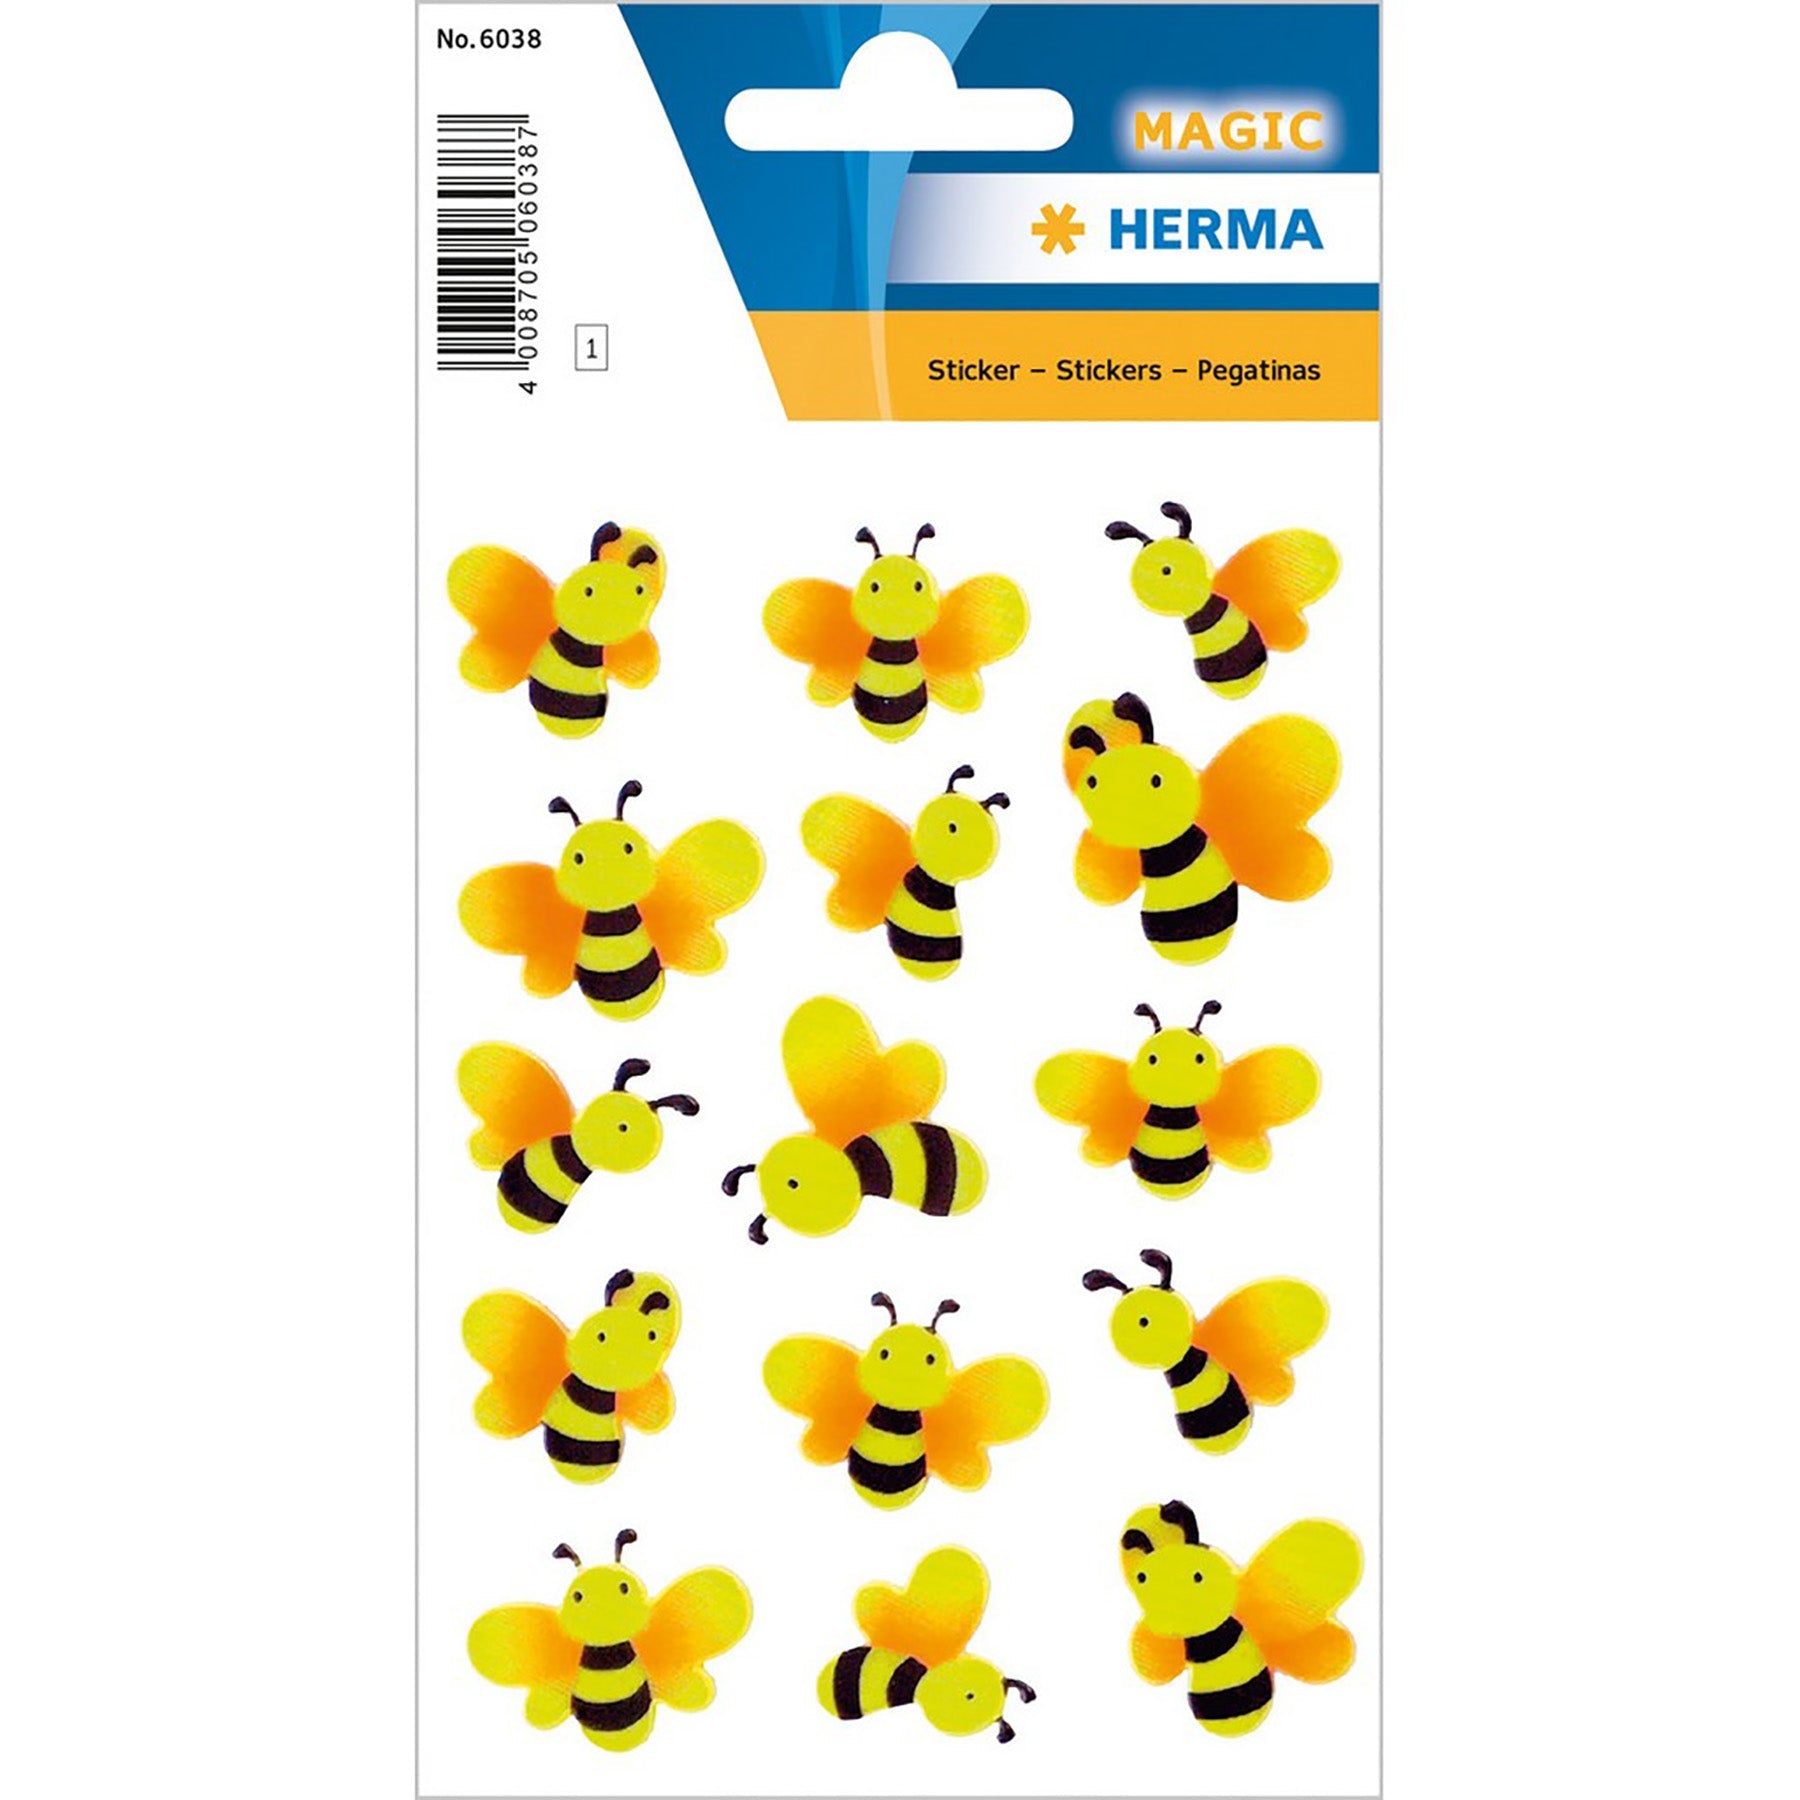 Herma Magic Stickers Bees Neon 4.75x3.1in Sheet